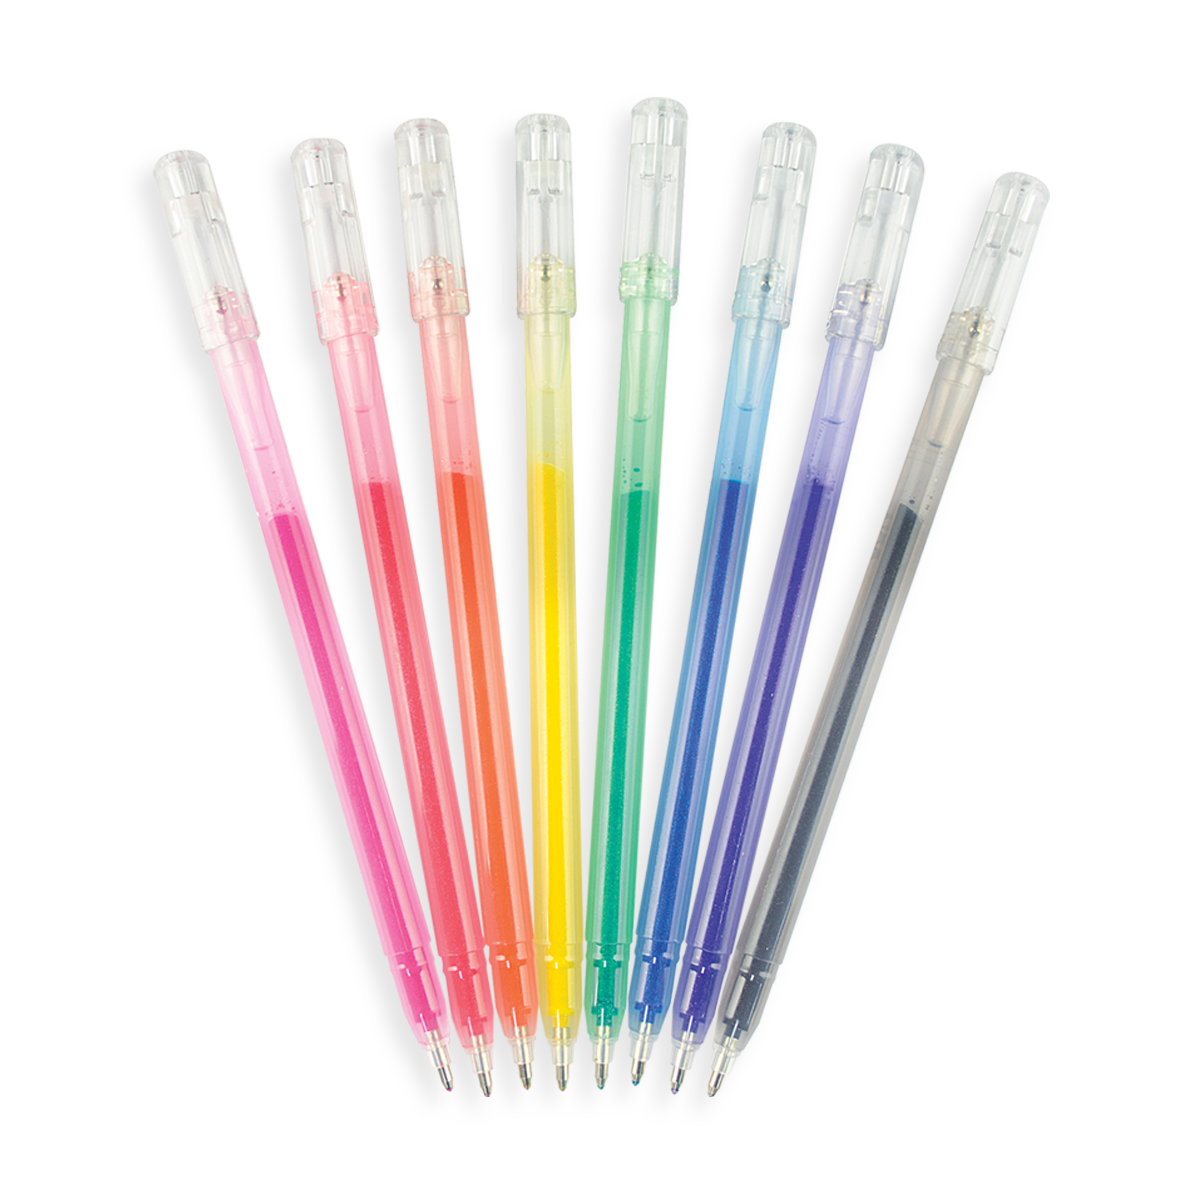 Radiant Writers glitter gel pens fanned out